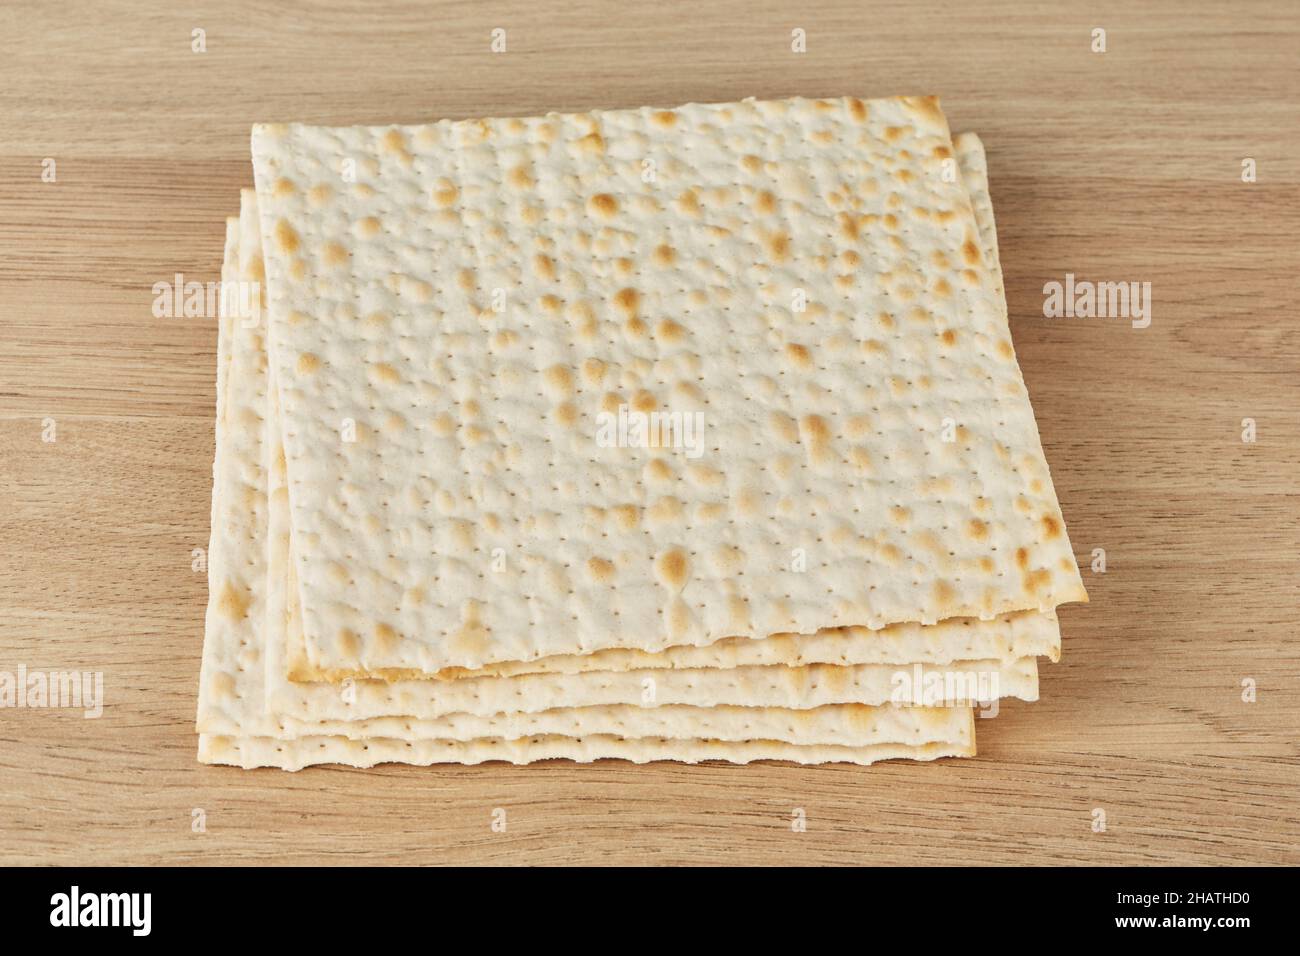 Religious Jewish matzah for the Jewish holiday of Passover Stock Photo